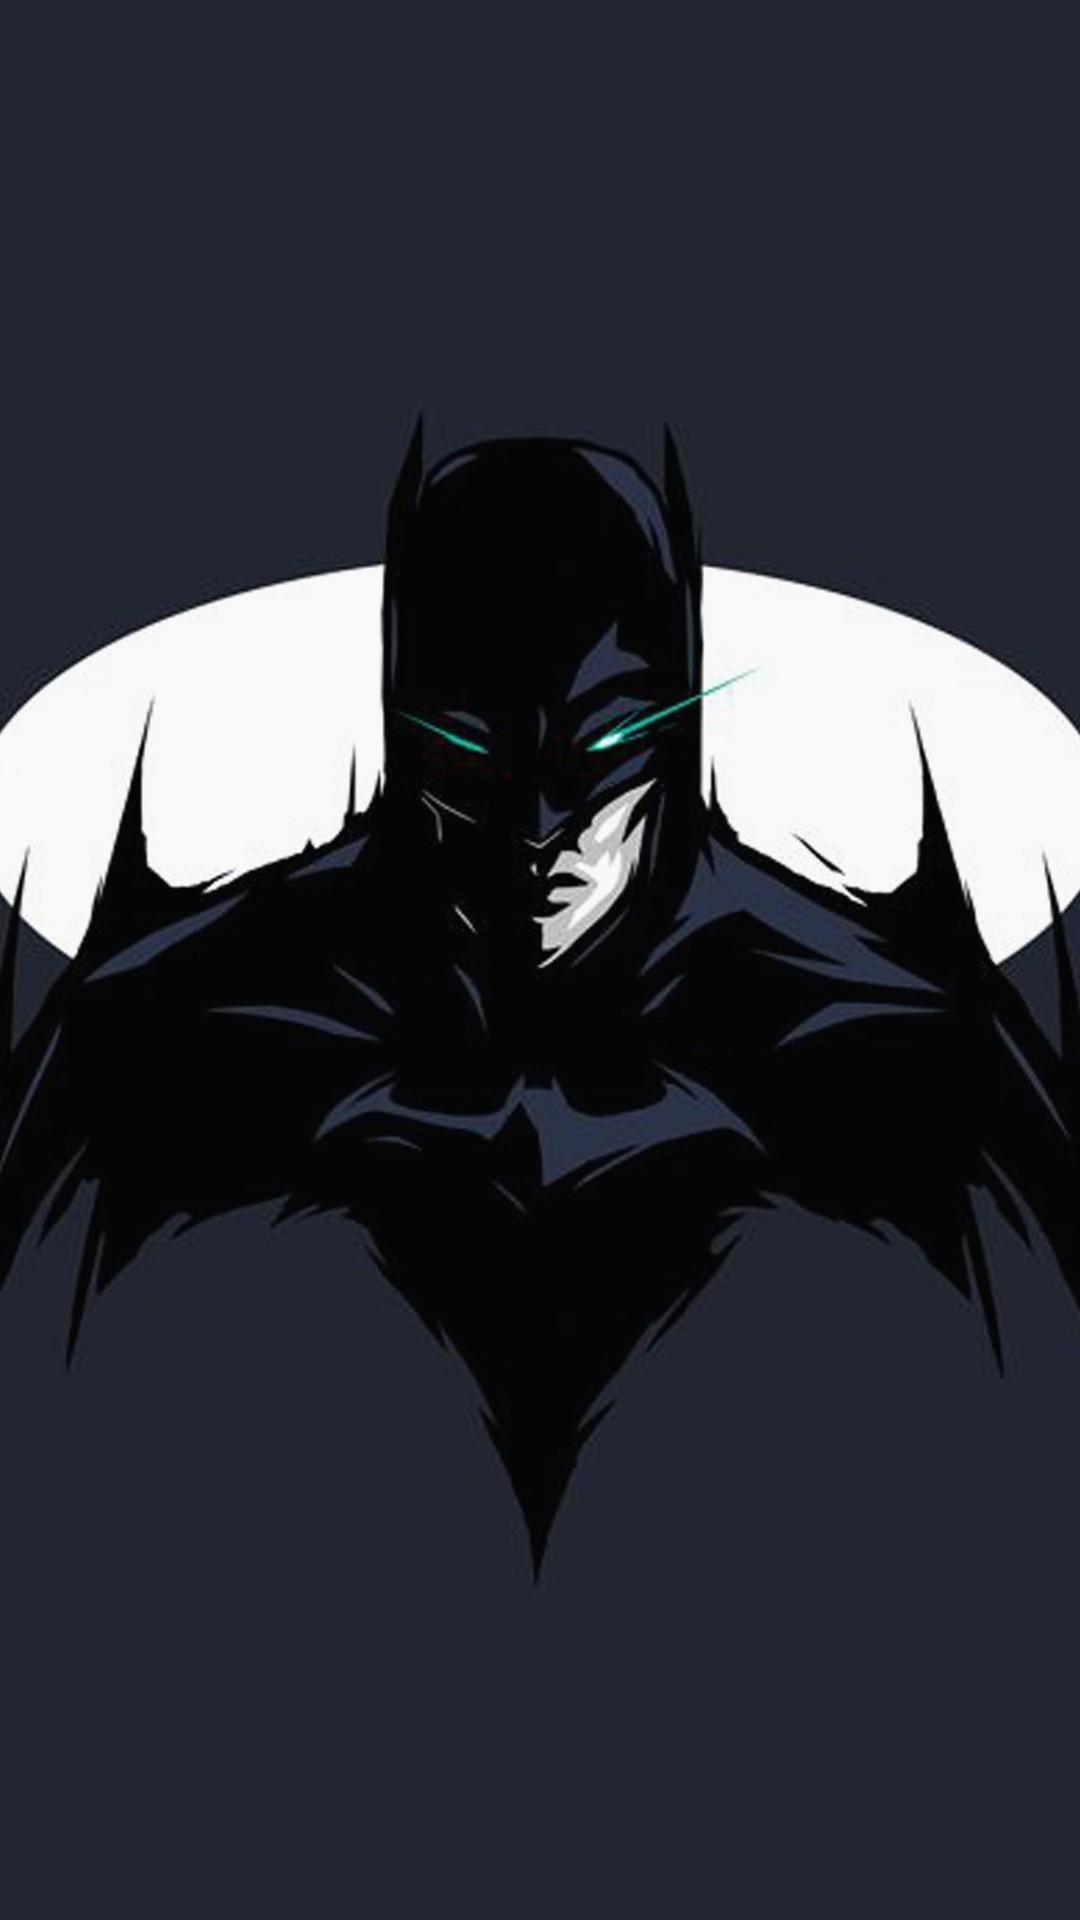 Cool Batman Wallpaper background picture